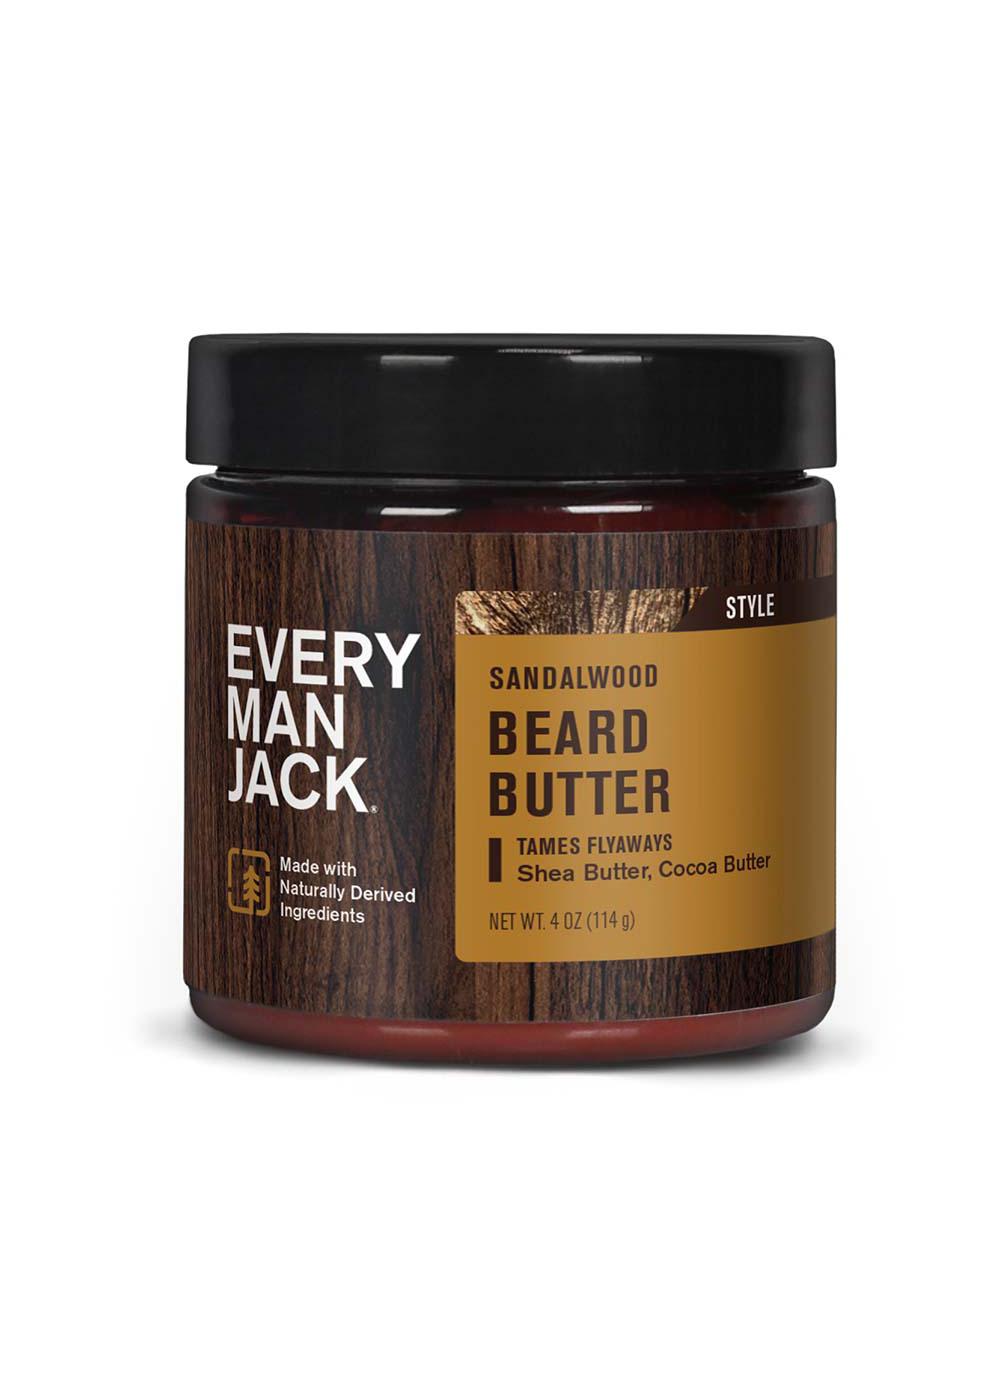 Every Man Jack Beard Butter - Sandalwood; image 1 of 2